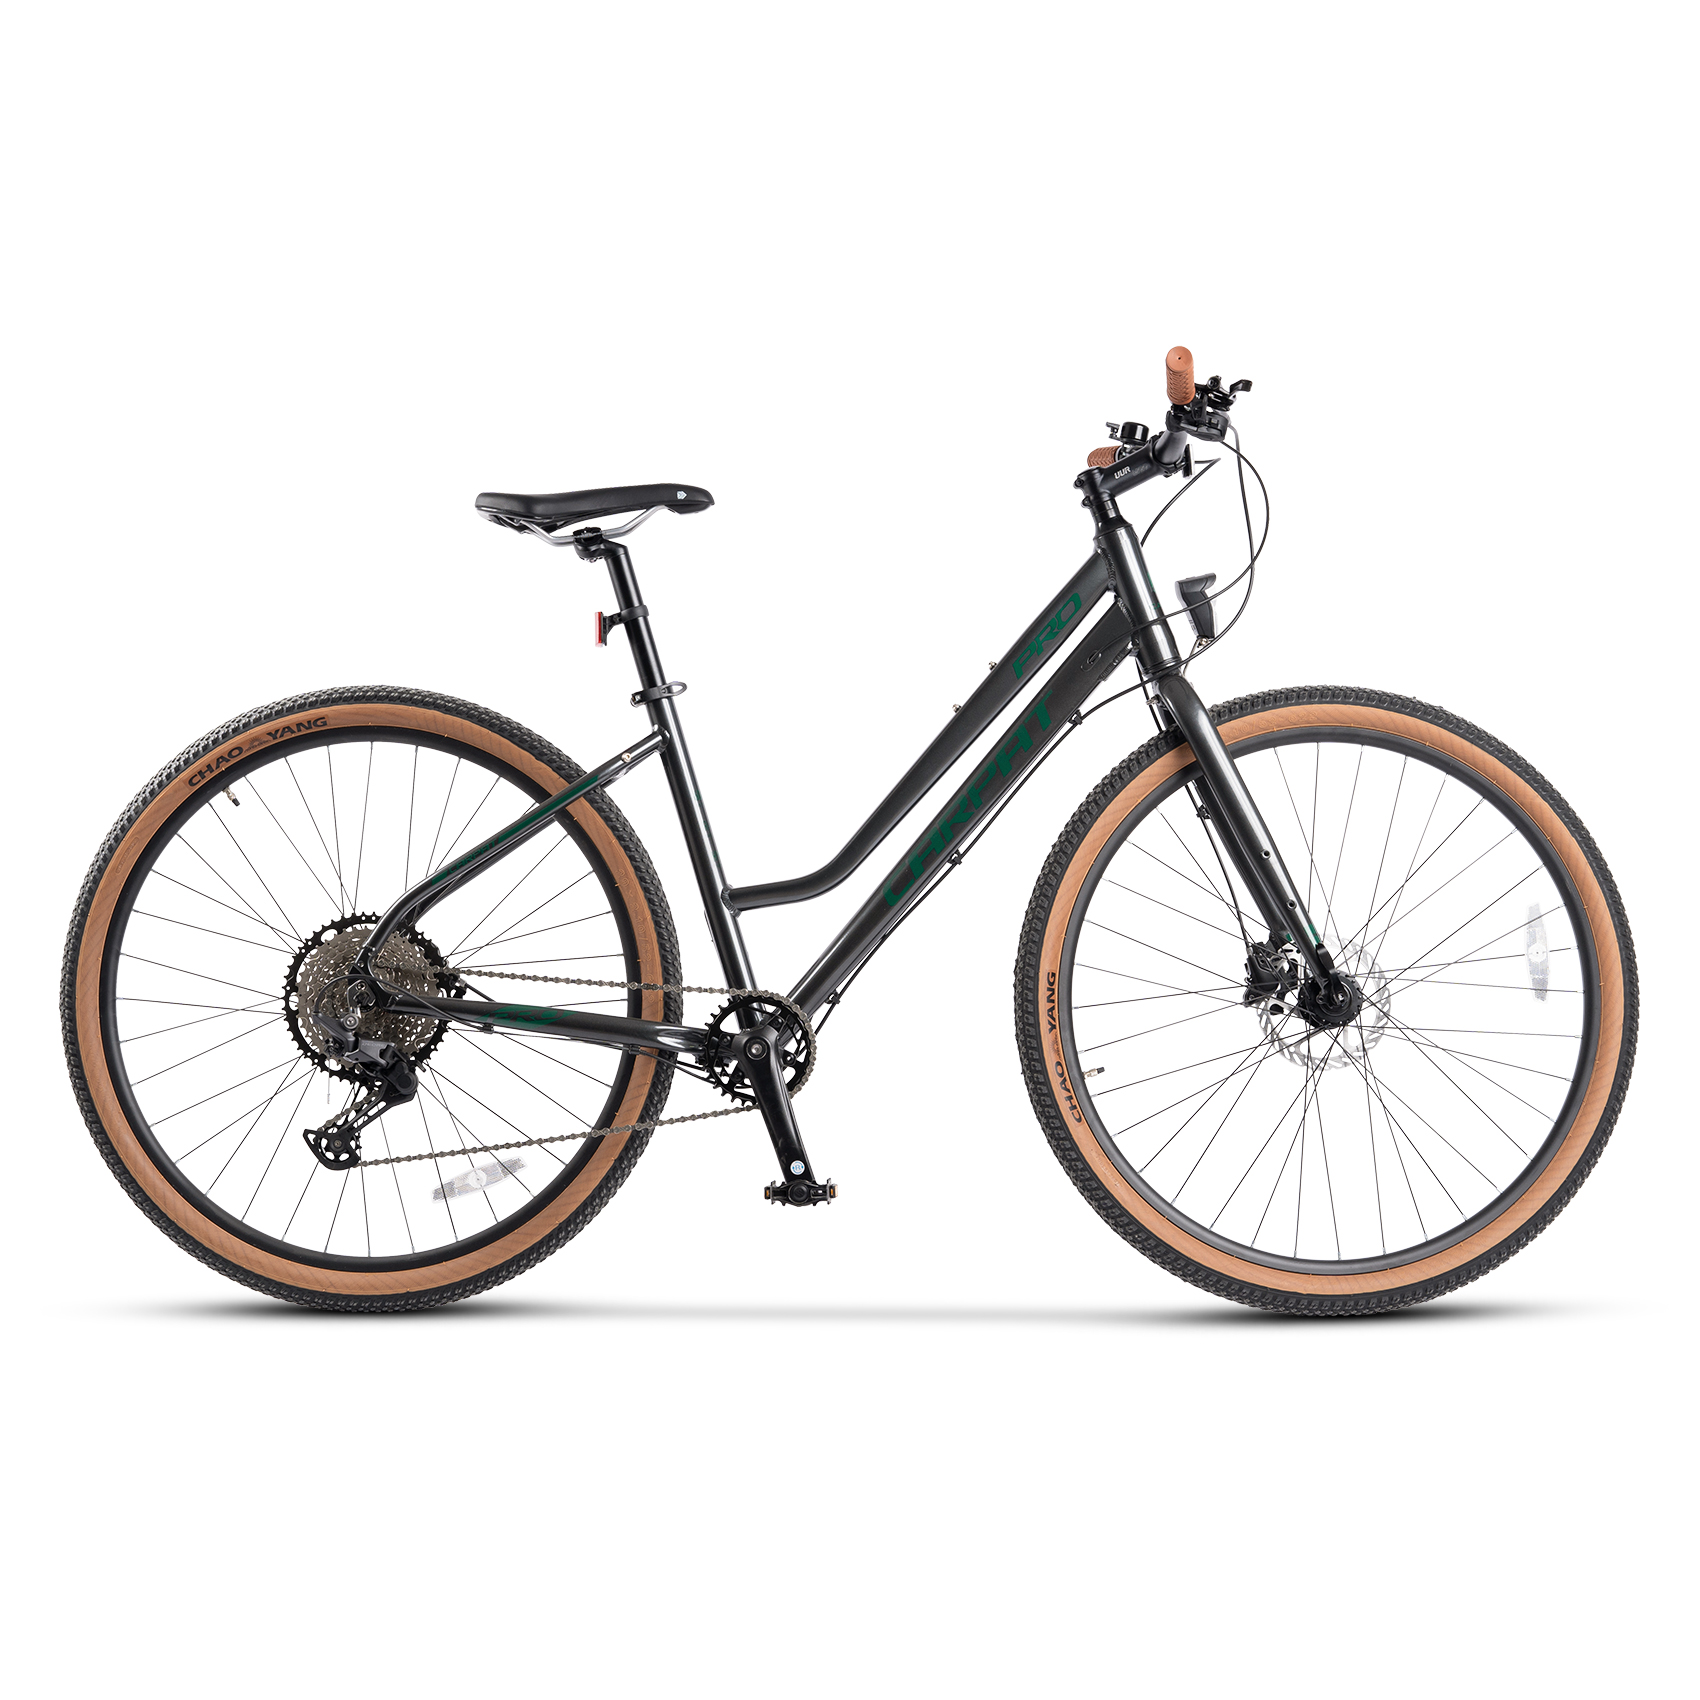 BICICLETE HIDRAULICE - Bicicleta Hidraulica Trekking Carpat PRO C29272H 29", Gri/Verde, https:carpatsport.ro